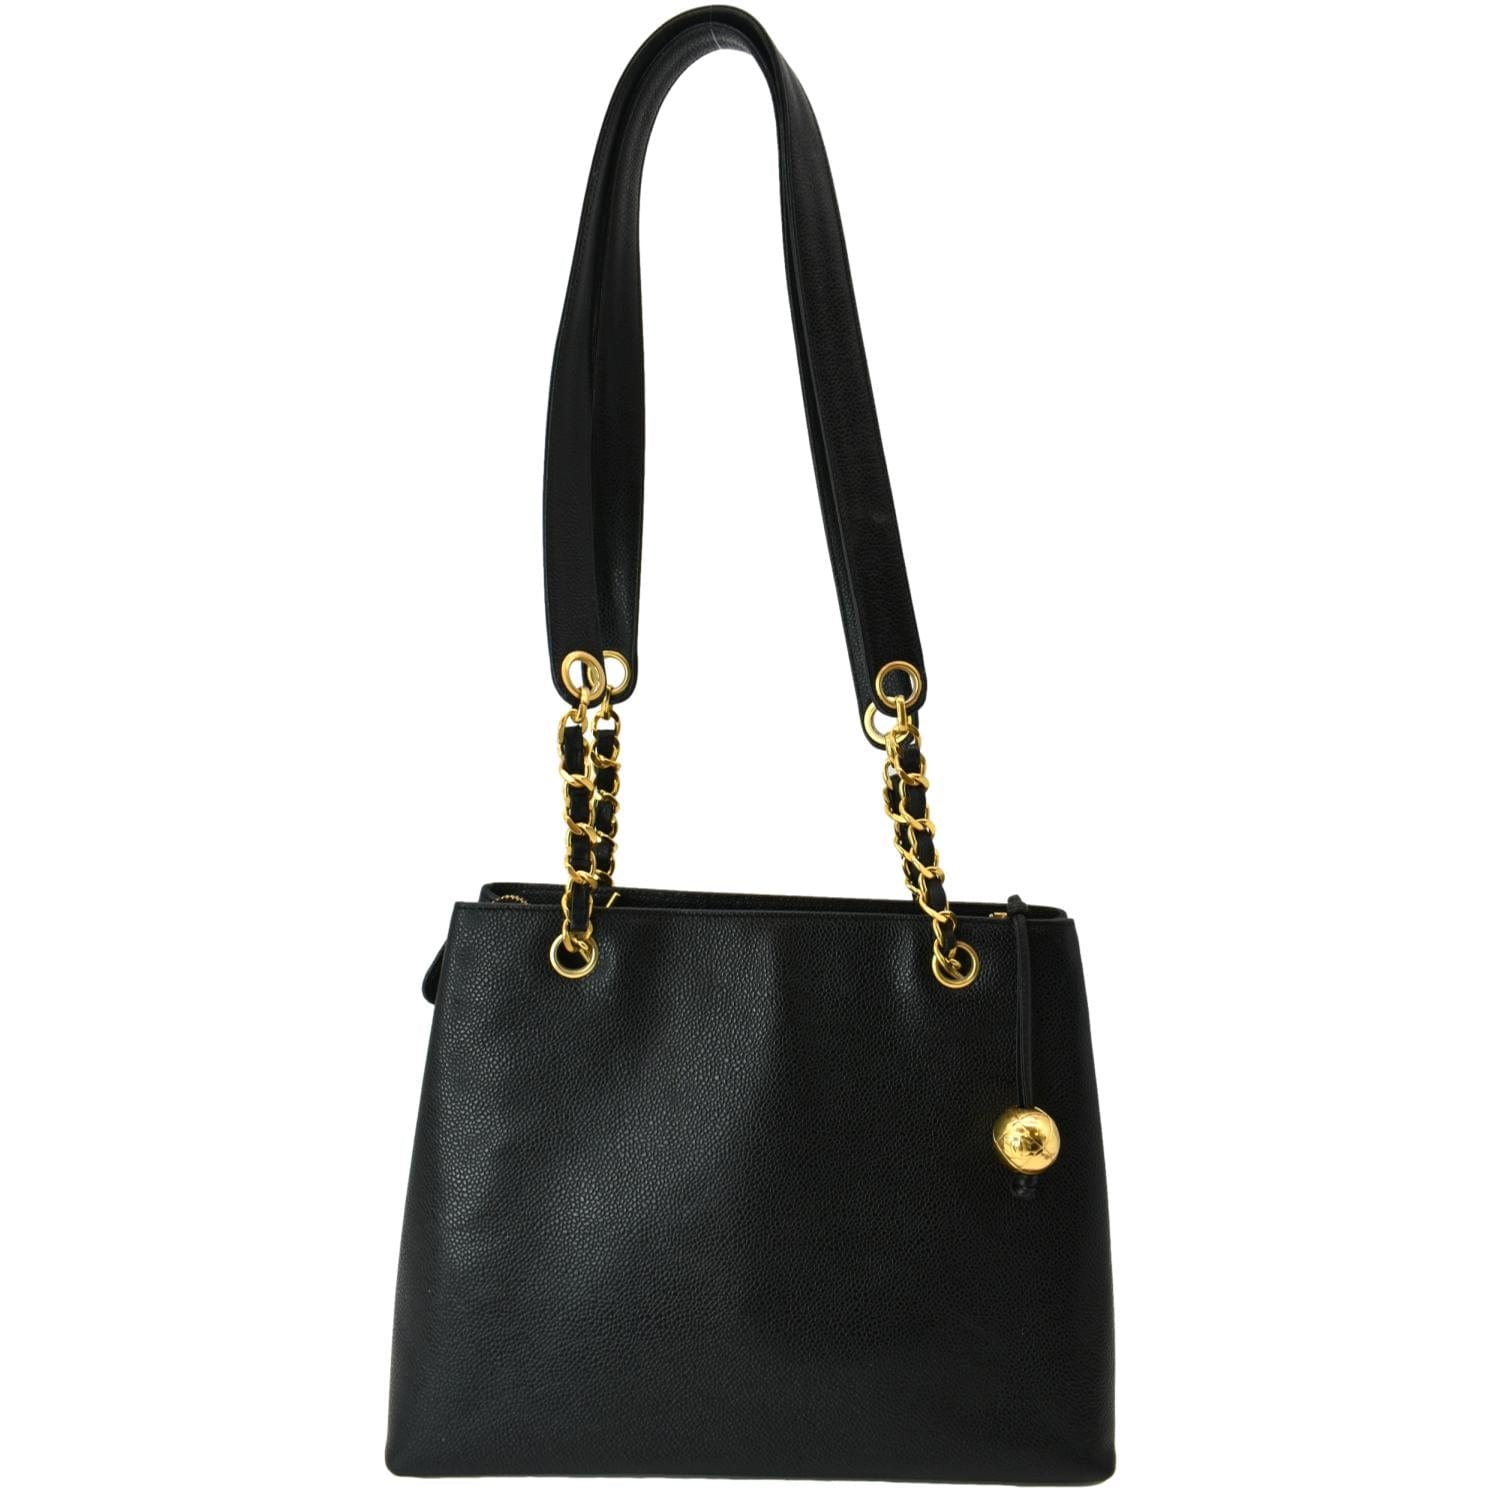 Pre-Loved Authentic Designer Handbags & Accessories